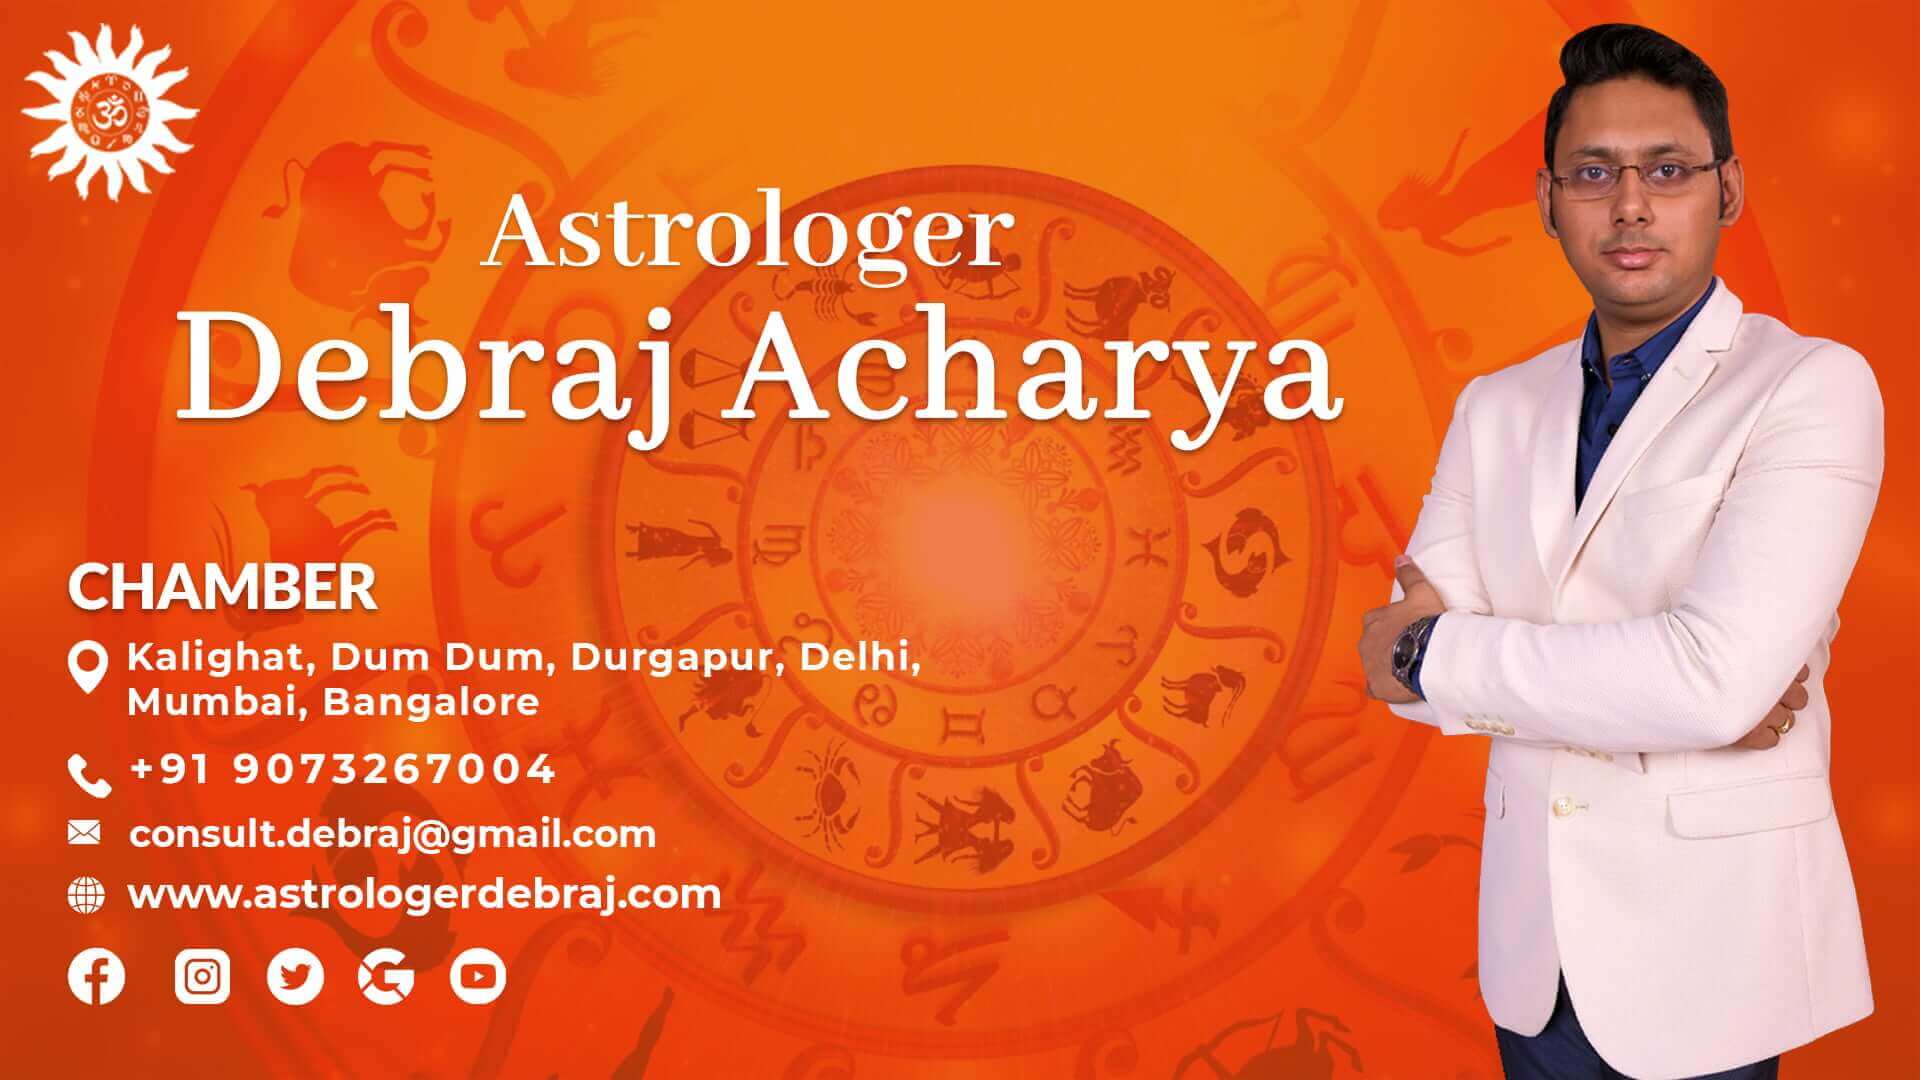 Banner of best Astrologer Debraj Acharya practice in Kolkata, India